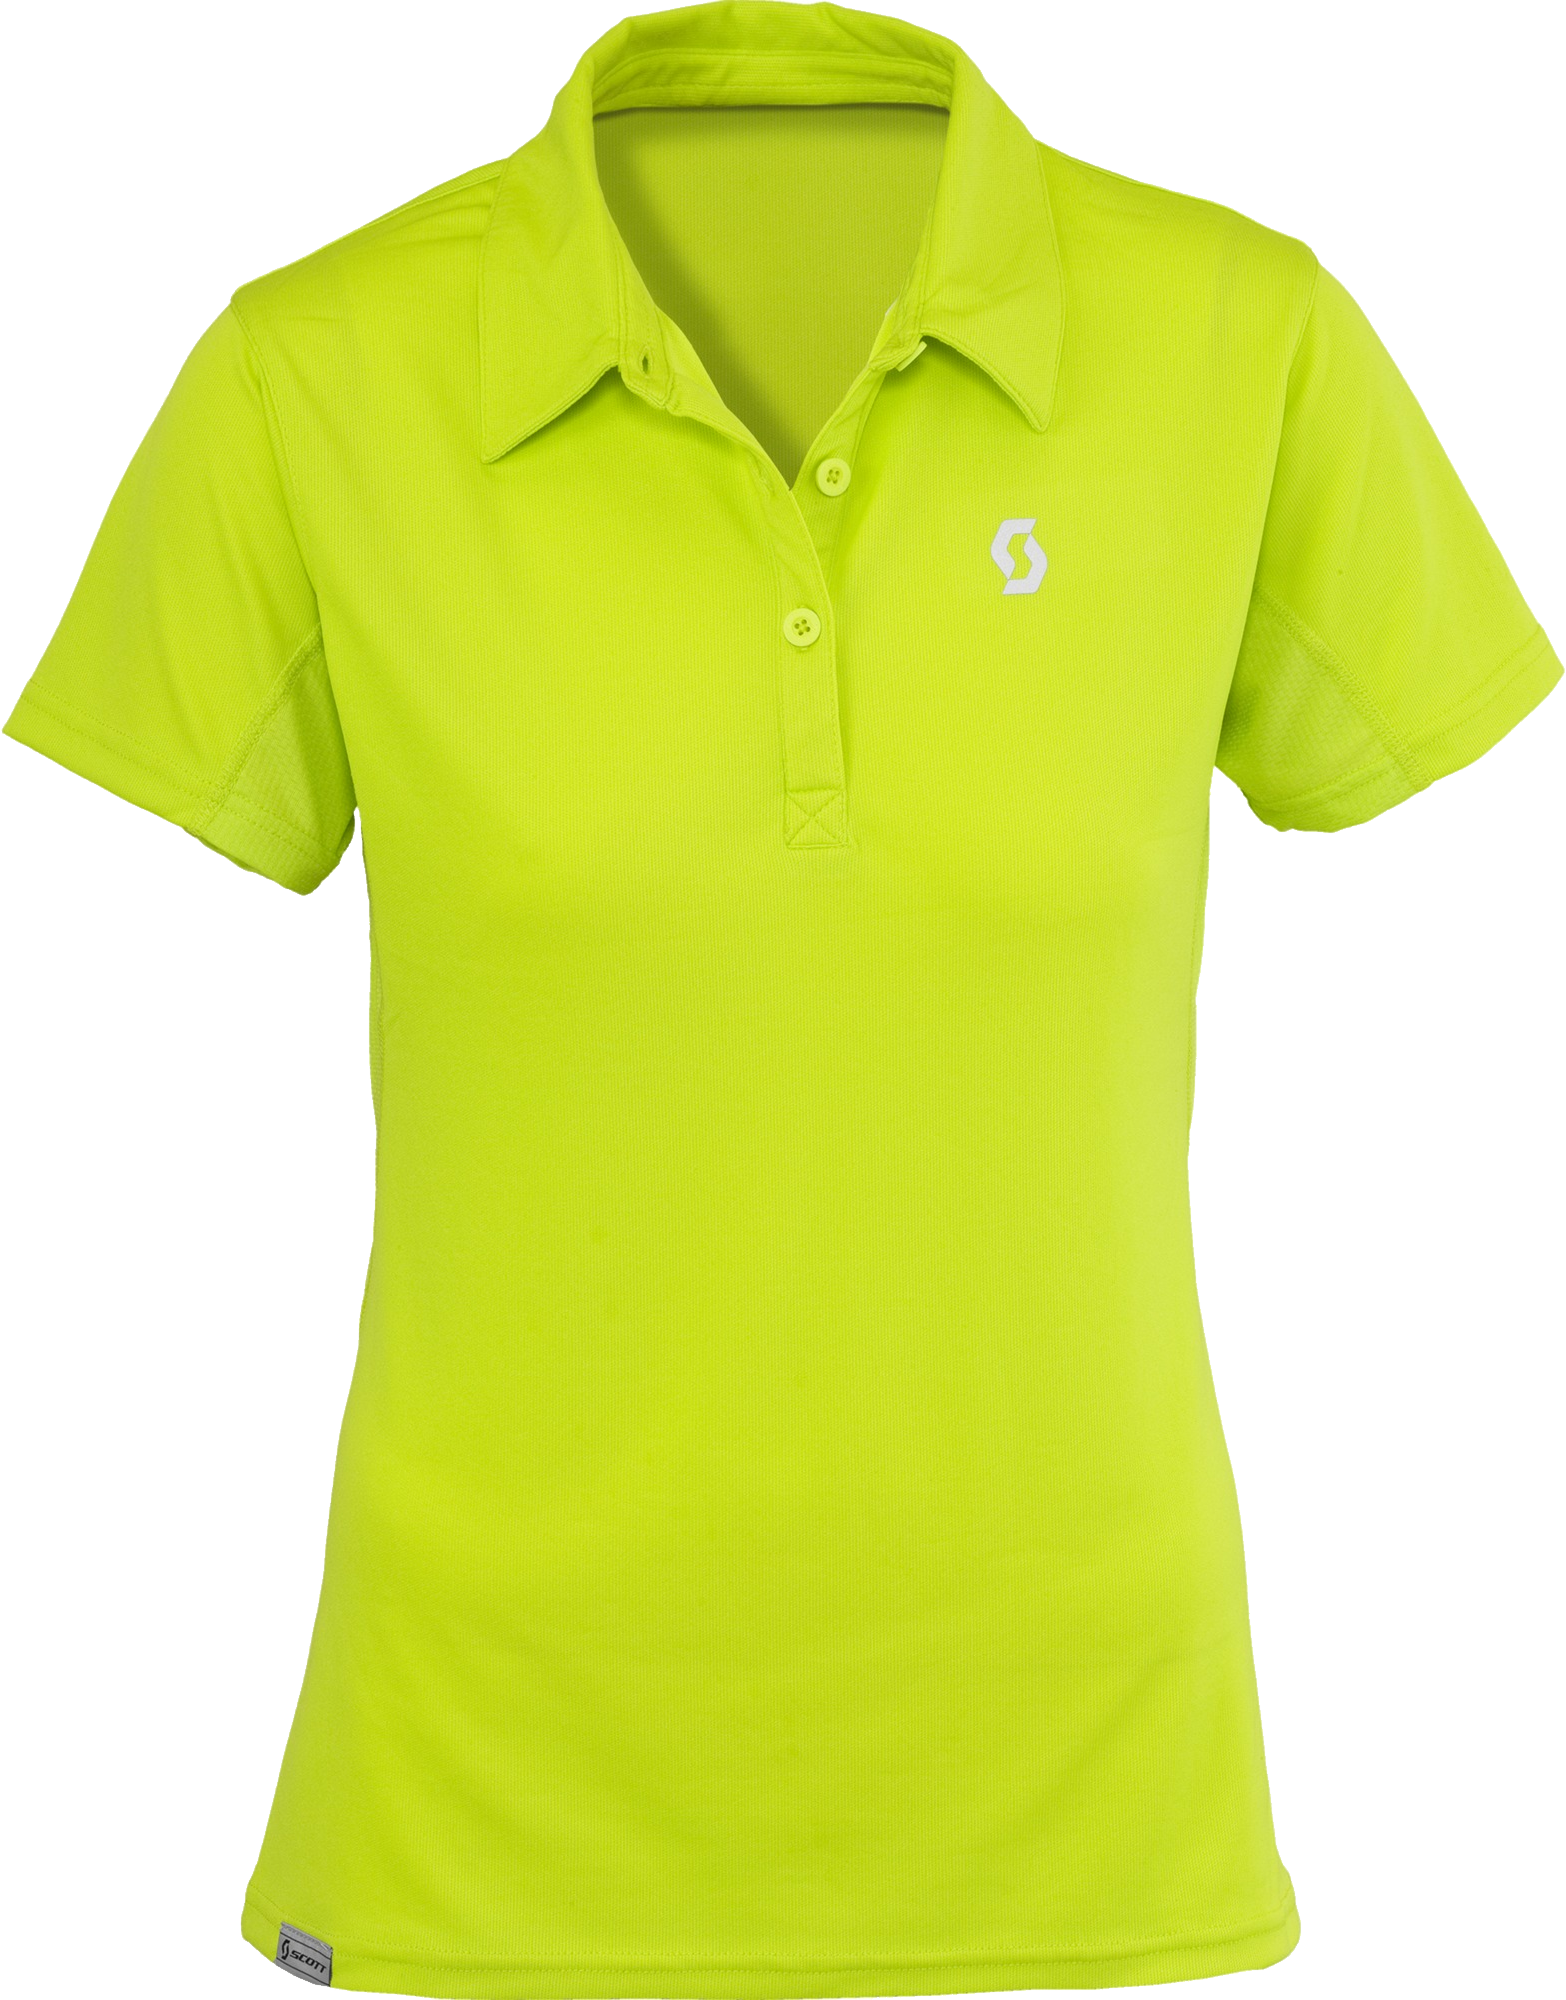 Green Polo Shirt PNG Image